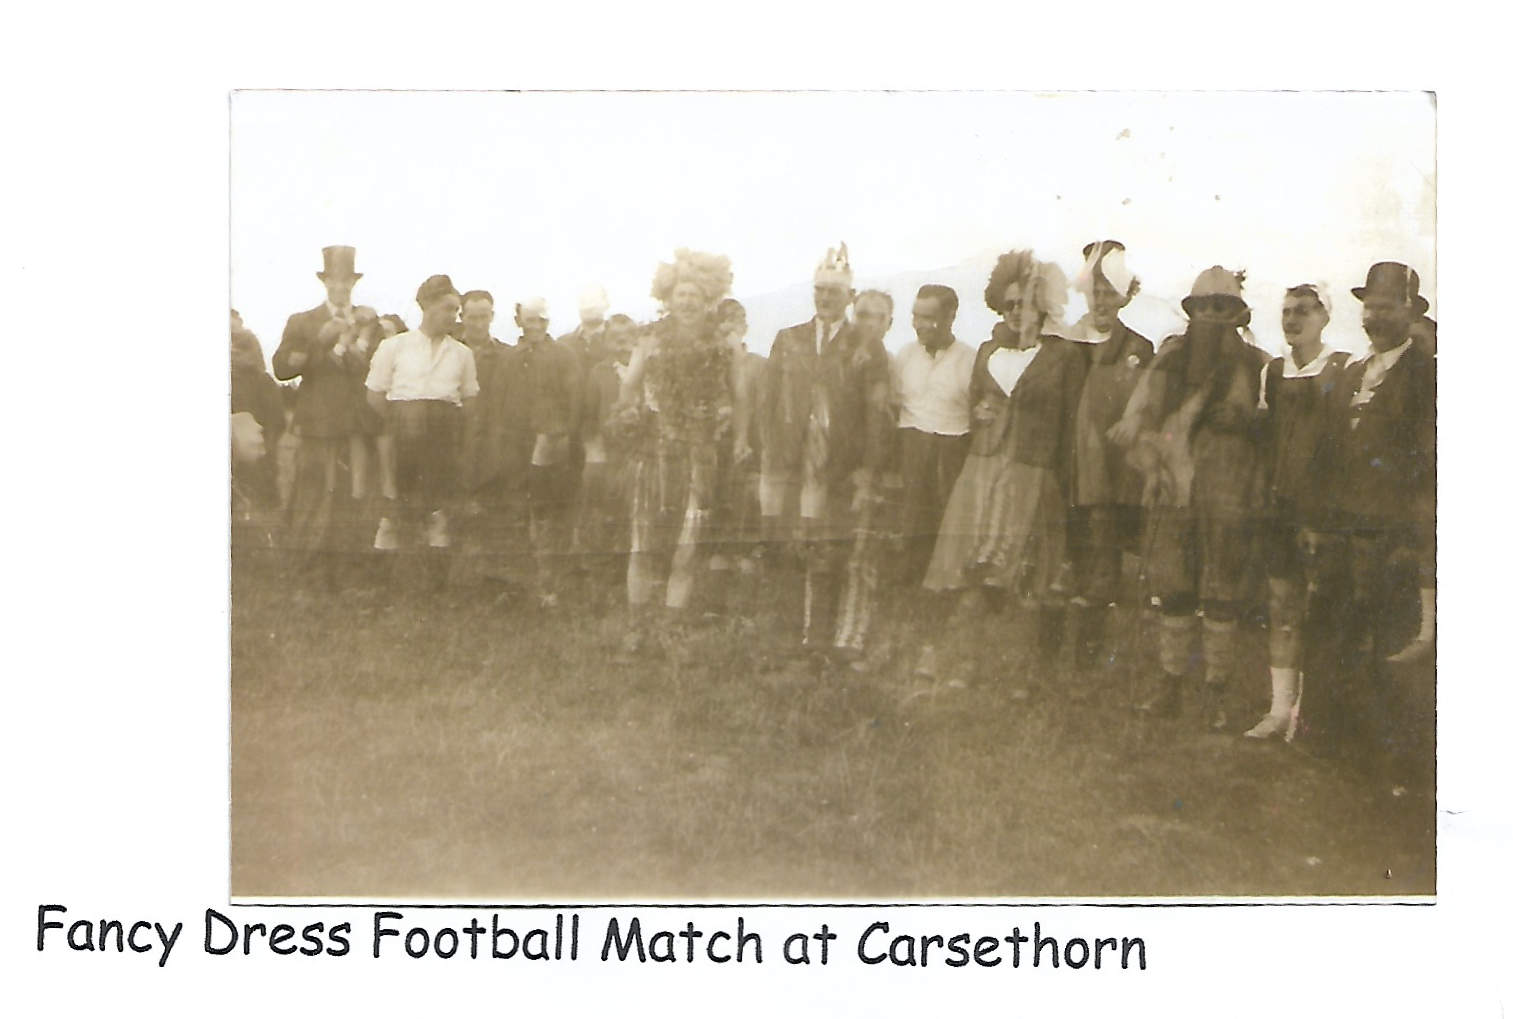 Fancy dress football match in Carsethorn